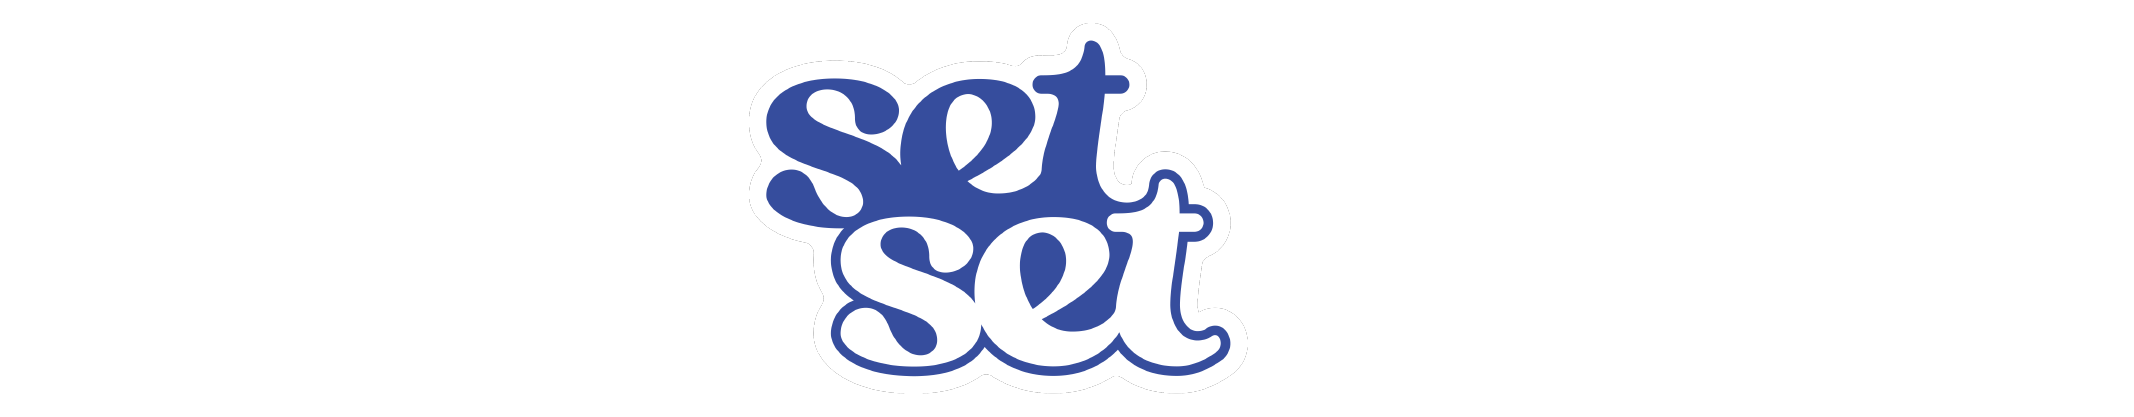 The SetSet Logo